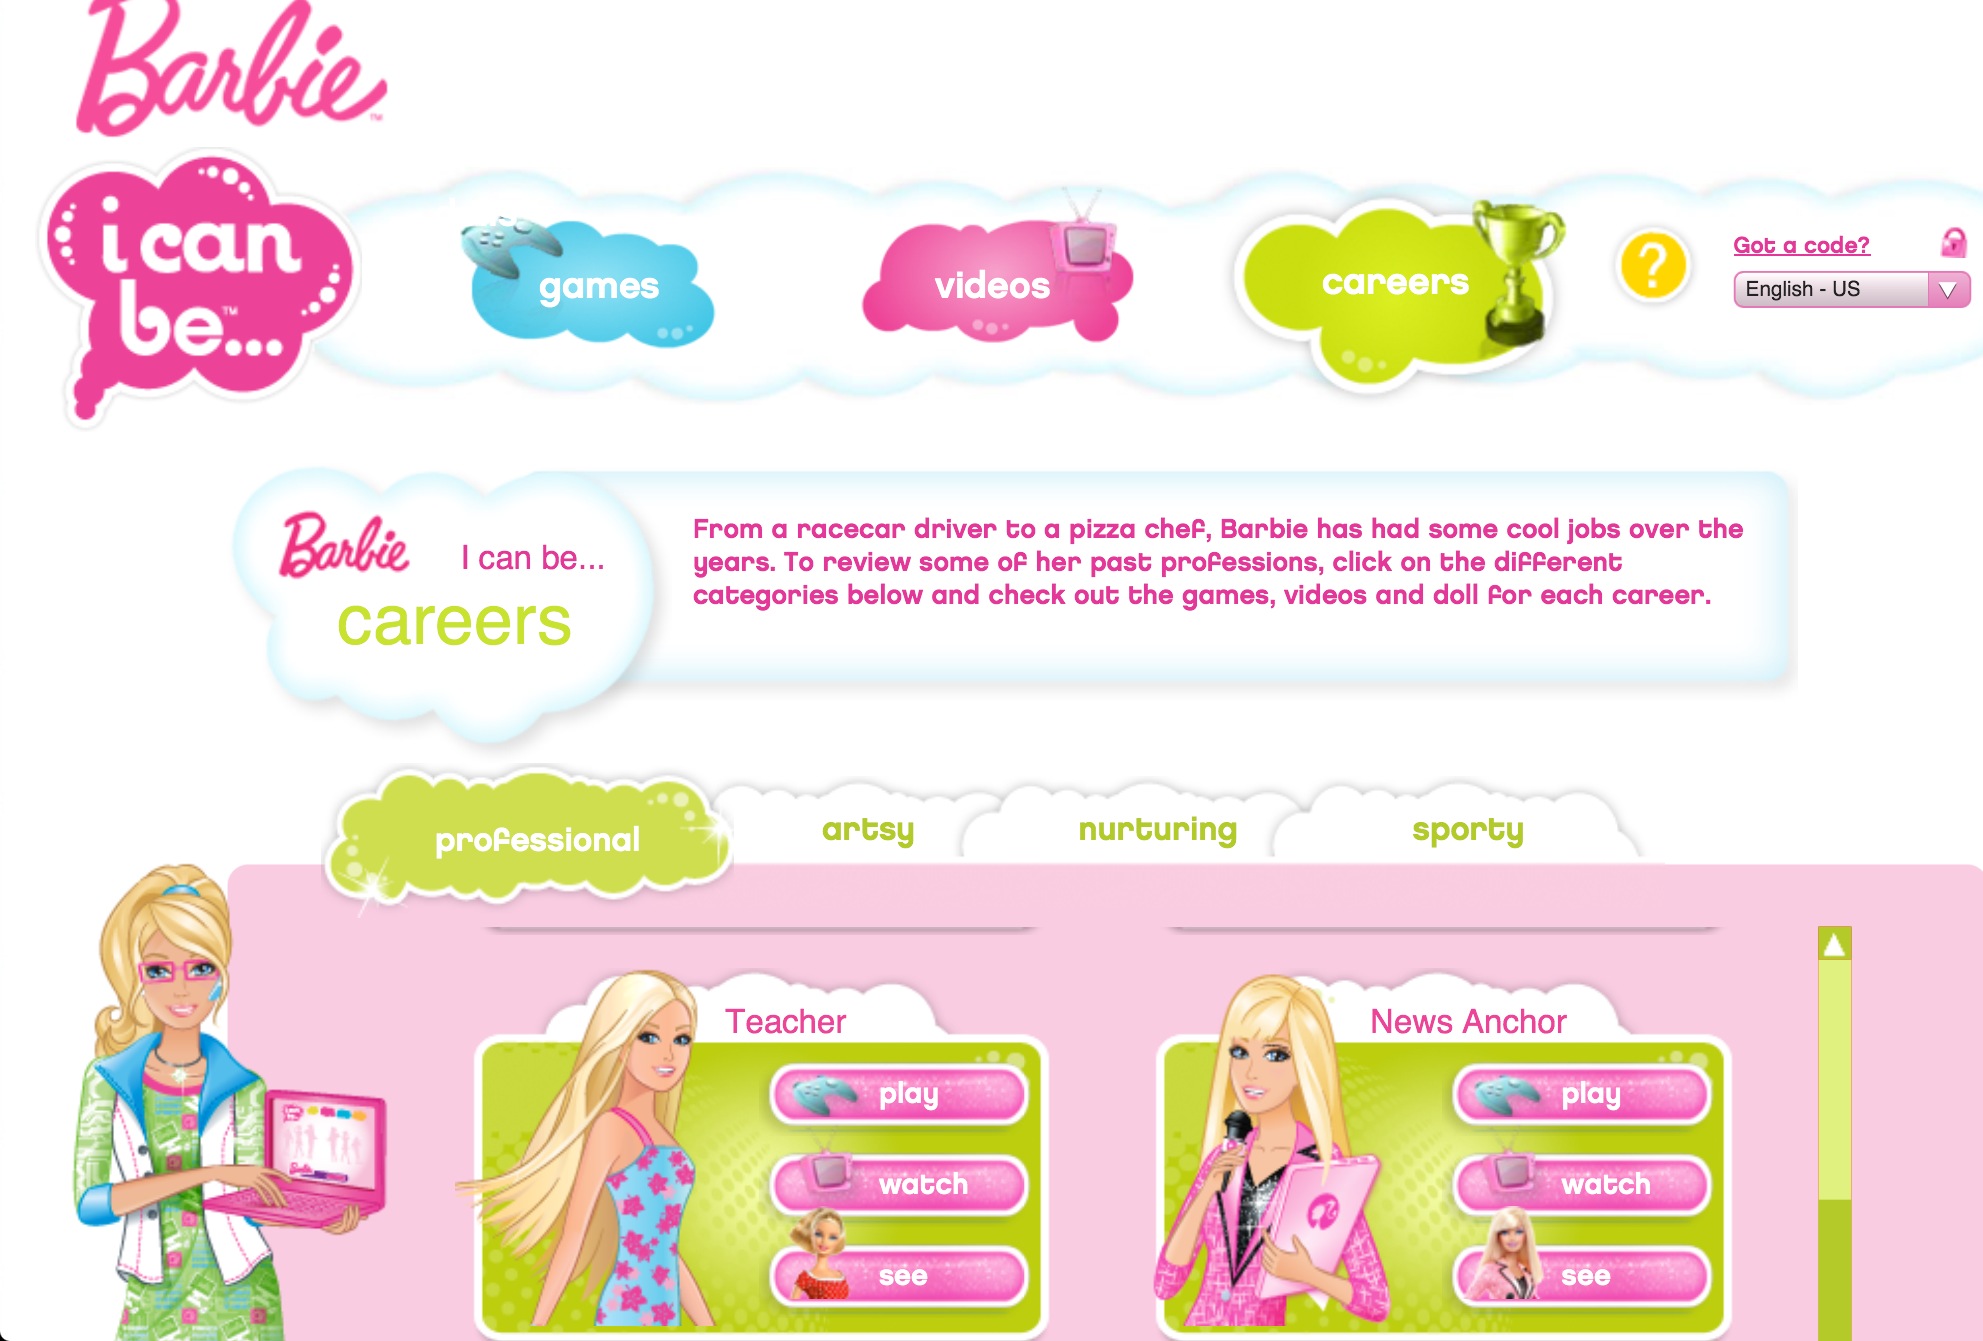 barbie model game